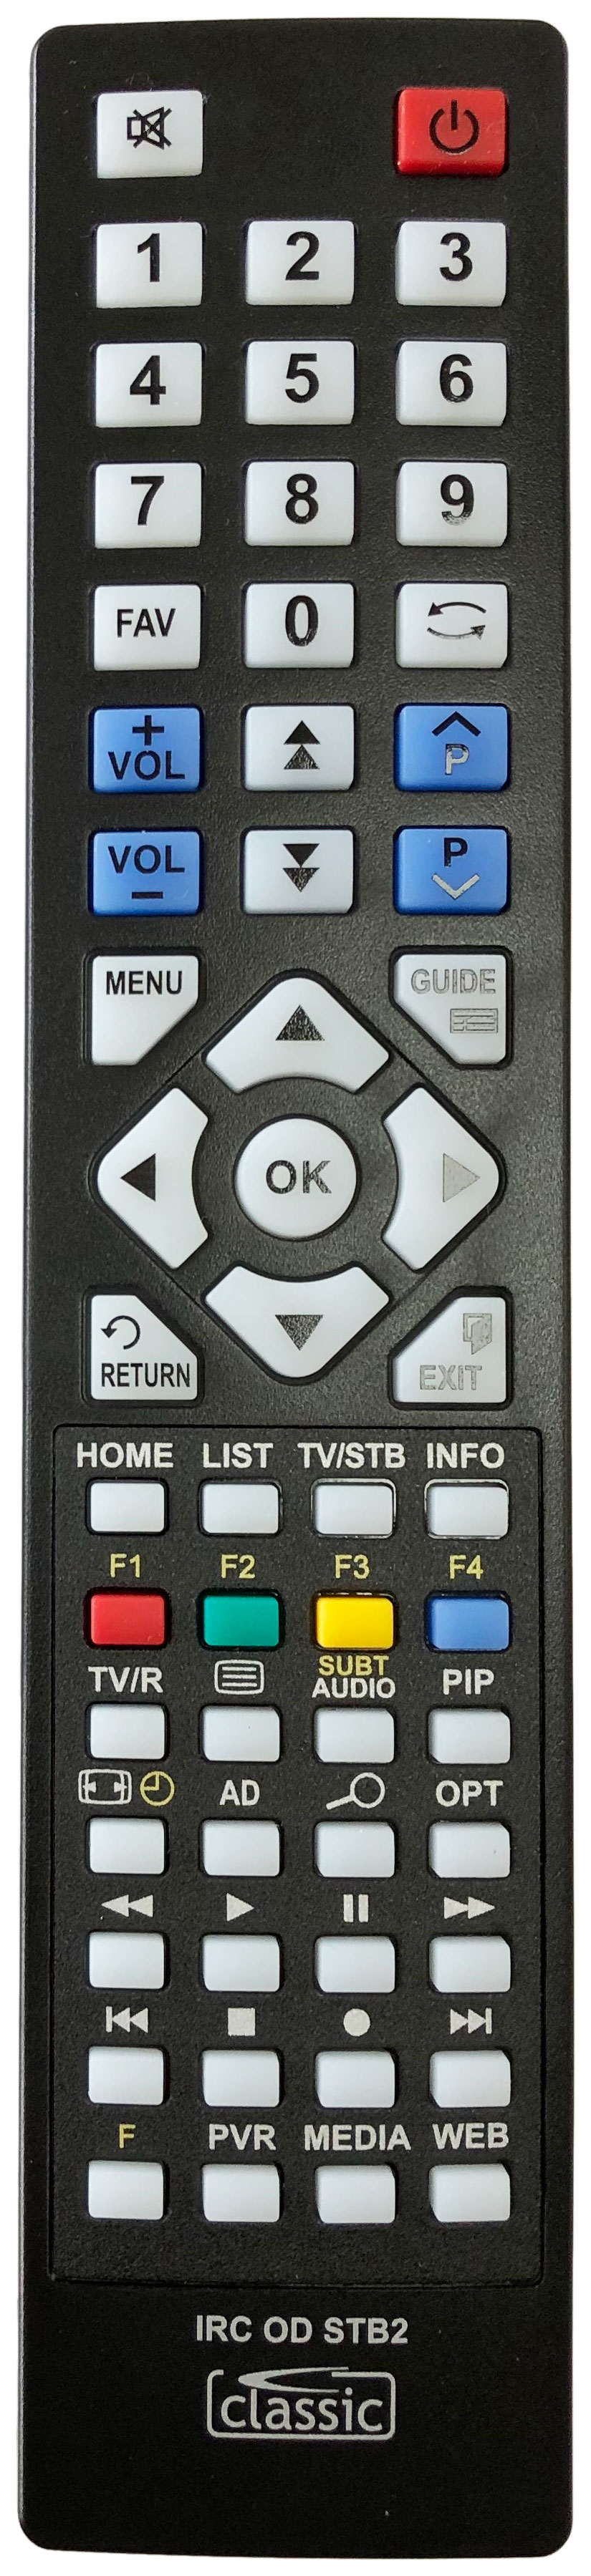 MANHATTAN PLAZA HDR-S320 Remote Control